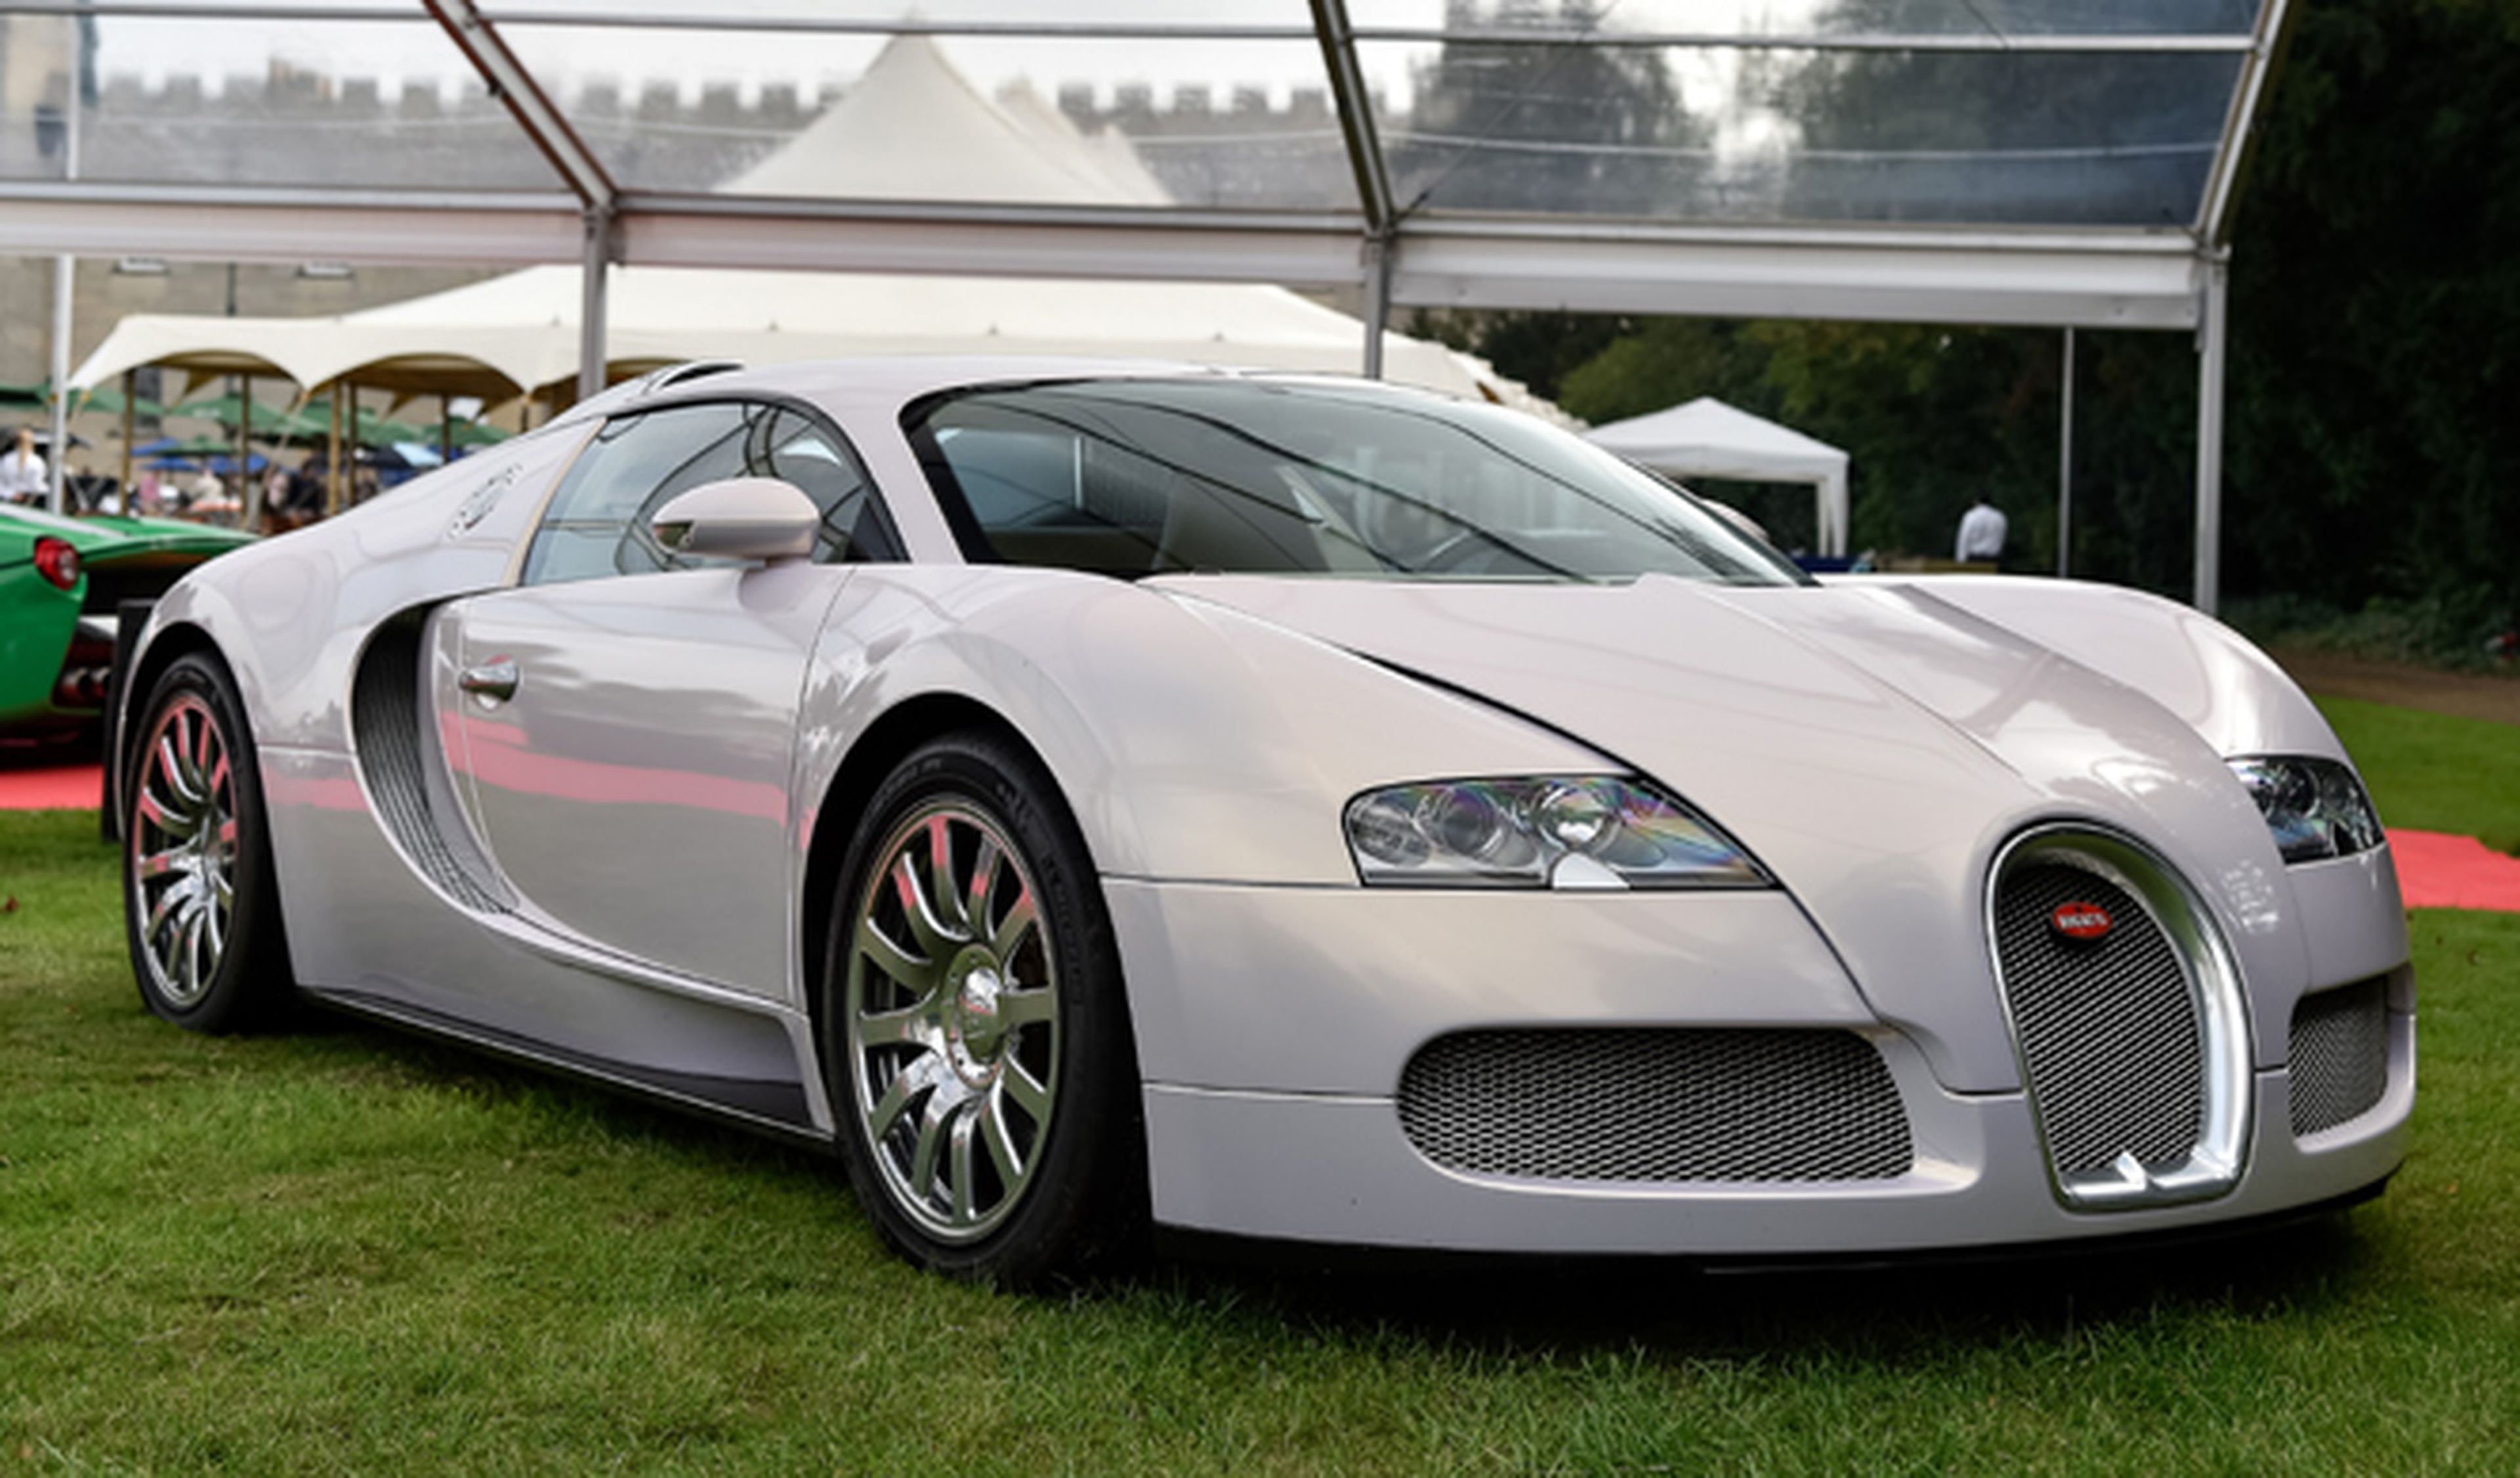 Solo quedan ocho unidades del Bugatti Veyron por vender